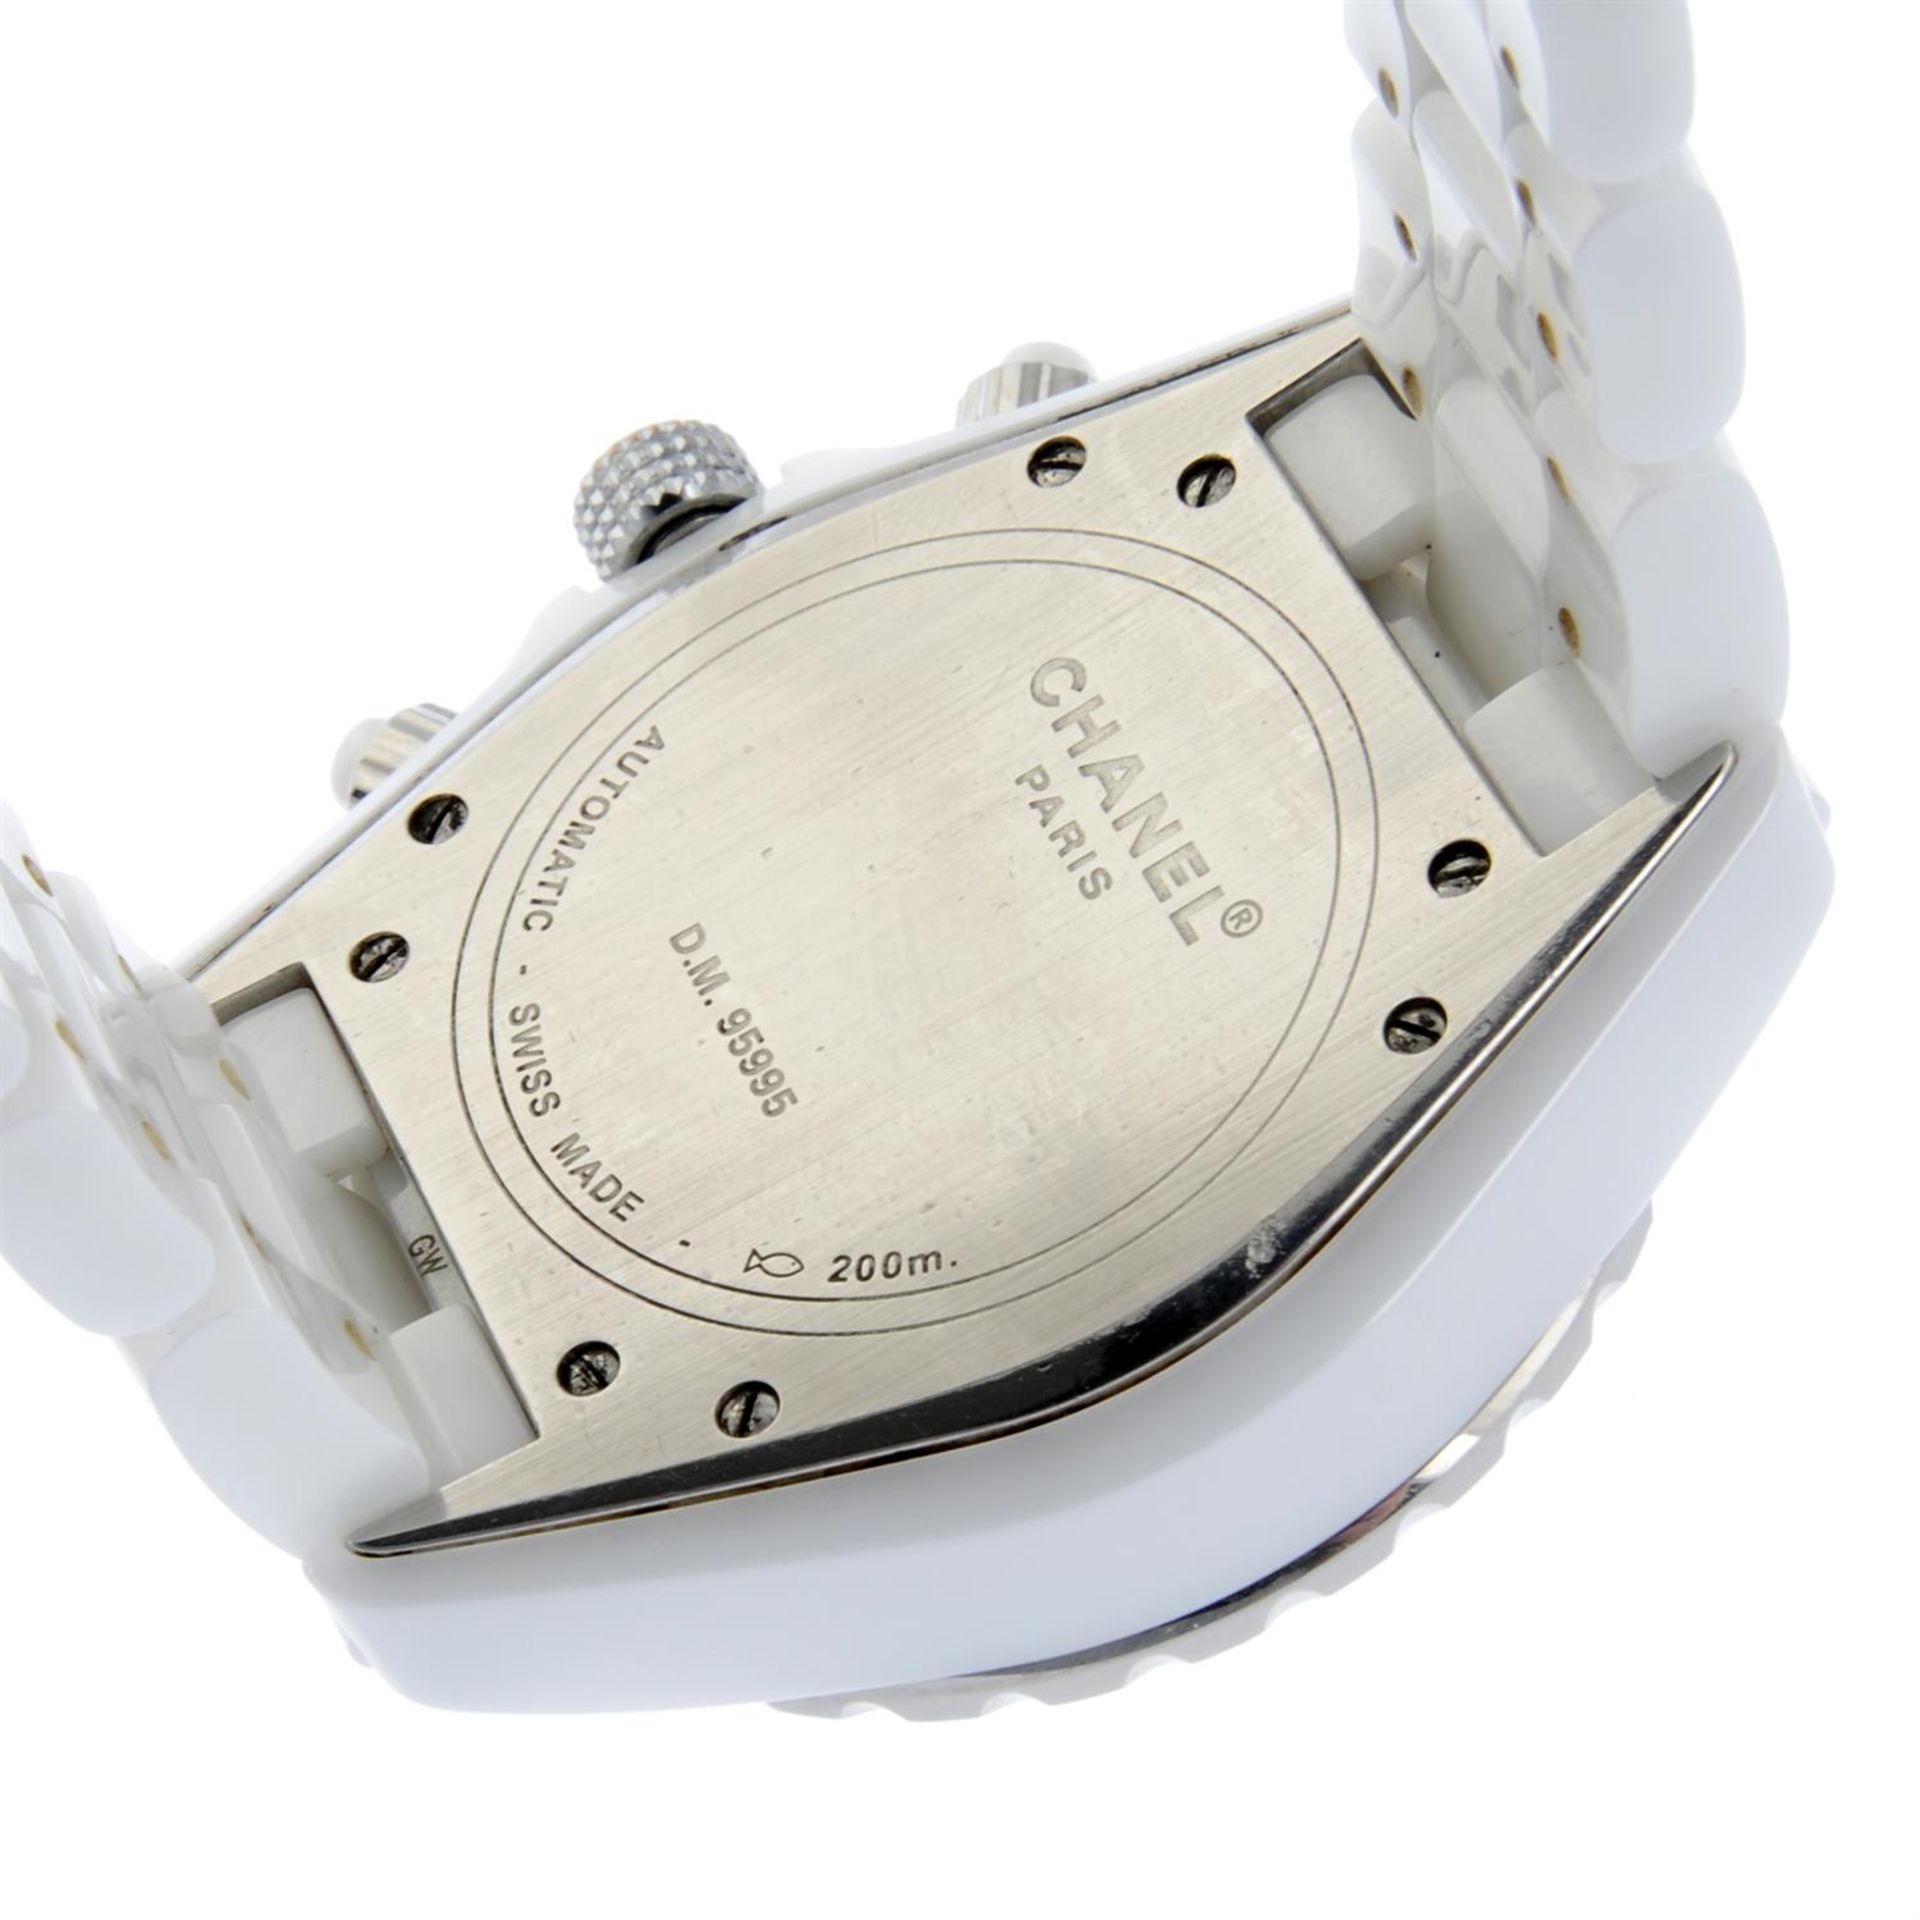 CHANEL - a ceramic J12 chronograph bracelet watch, 41mm. - Image 4 of 5